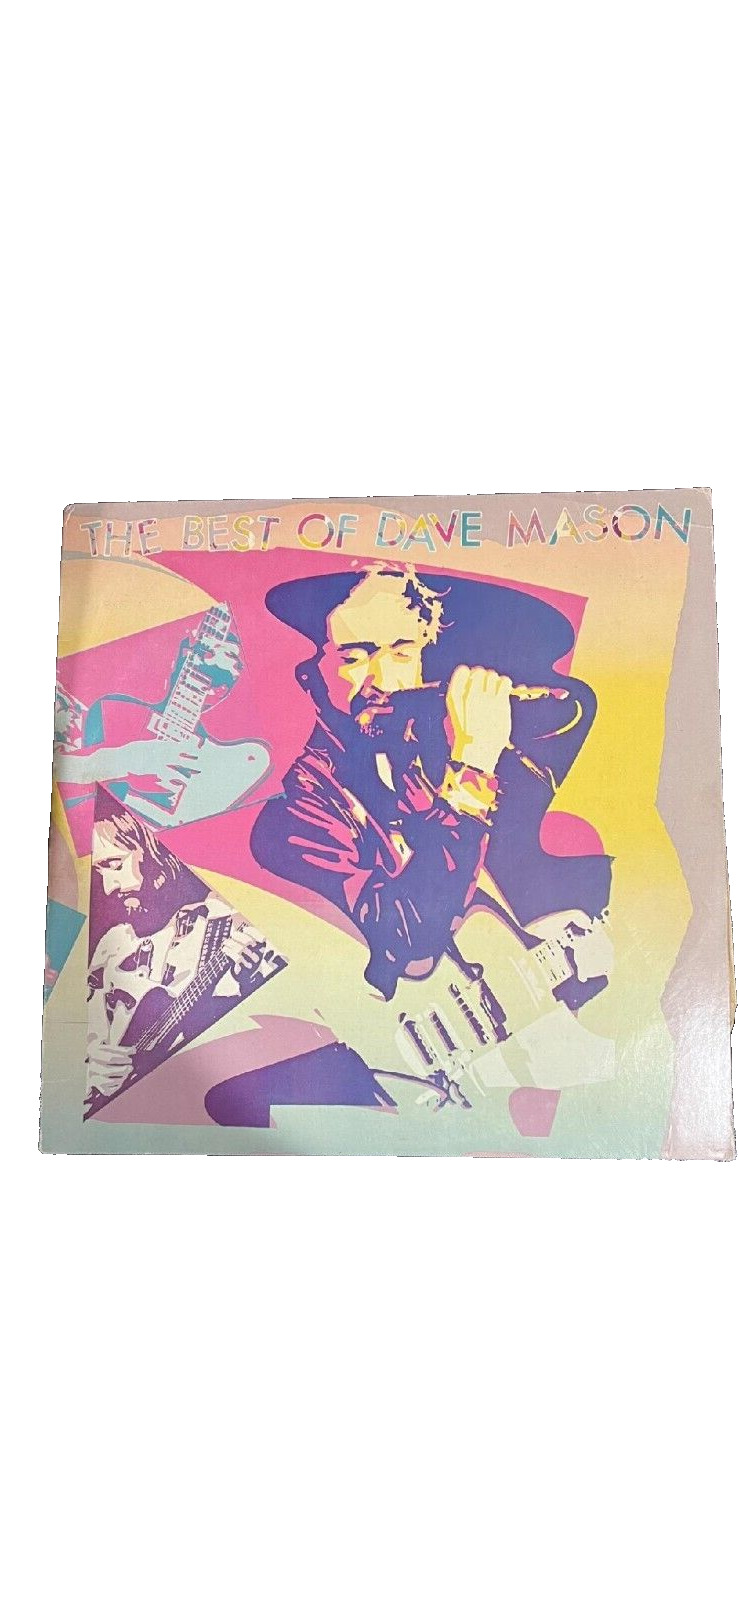 DAVE MASON The Best Of 1981 Vinyl LP Columbia PC 37089 -